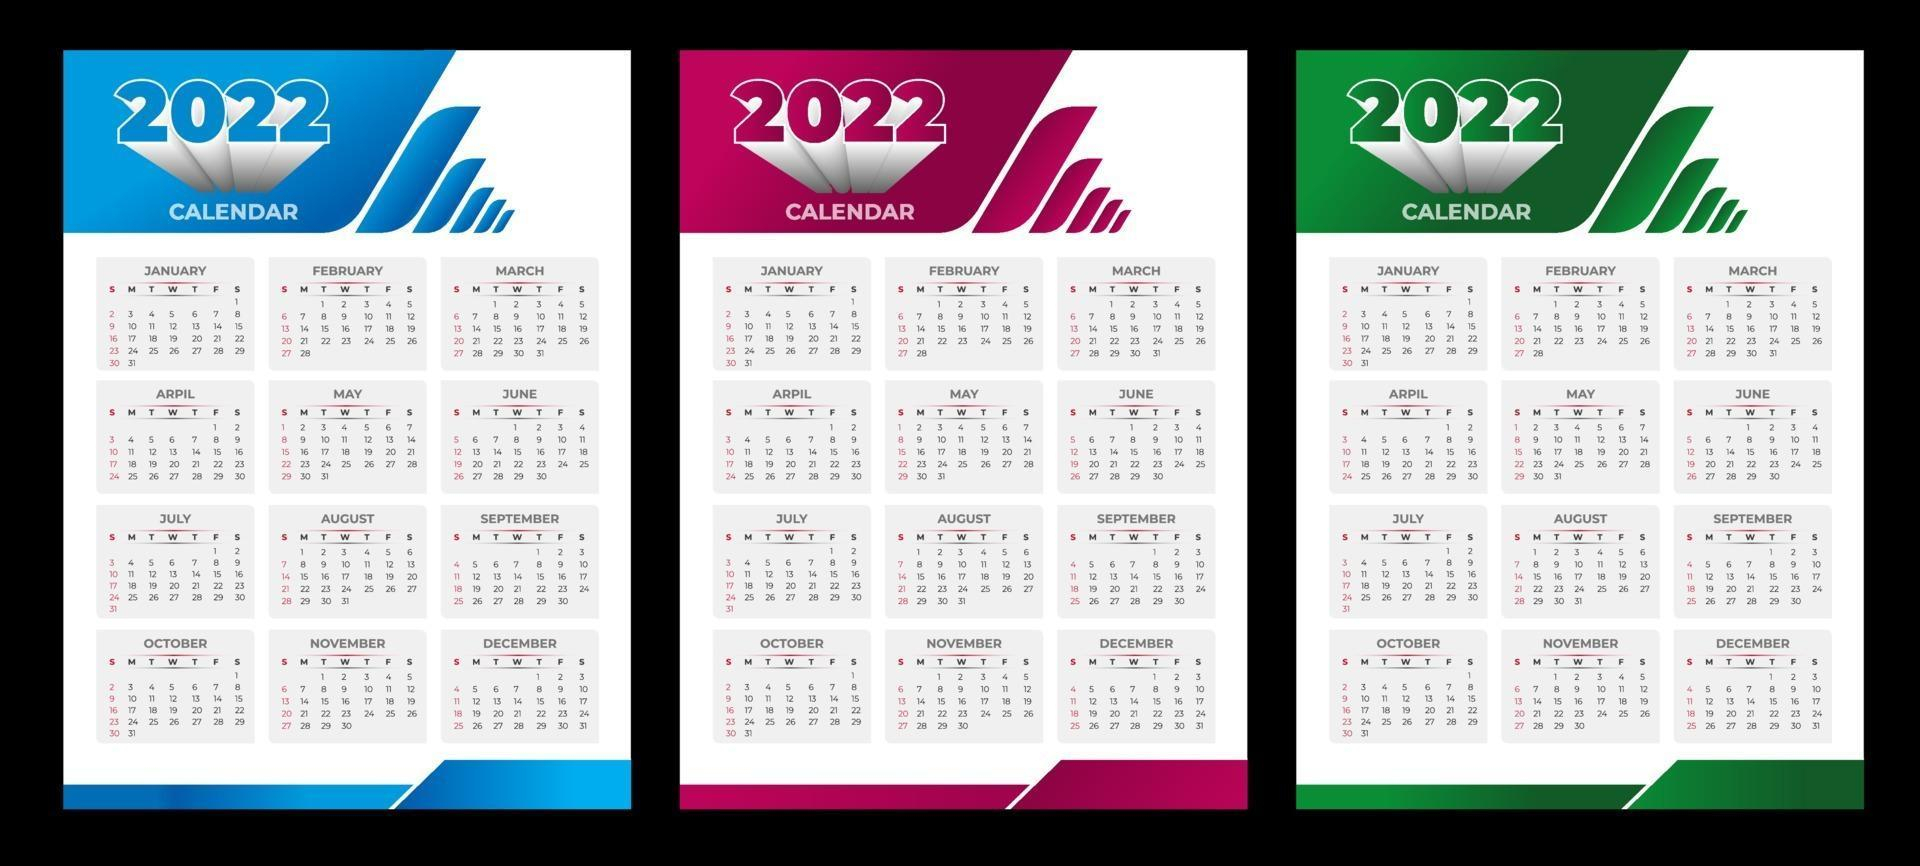 2022 Monthly Calendar Template For New Year Wall Calendar